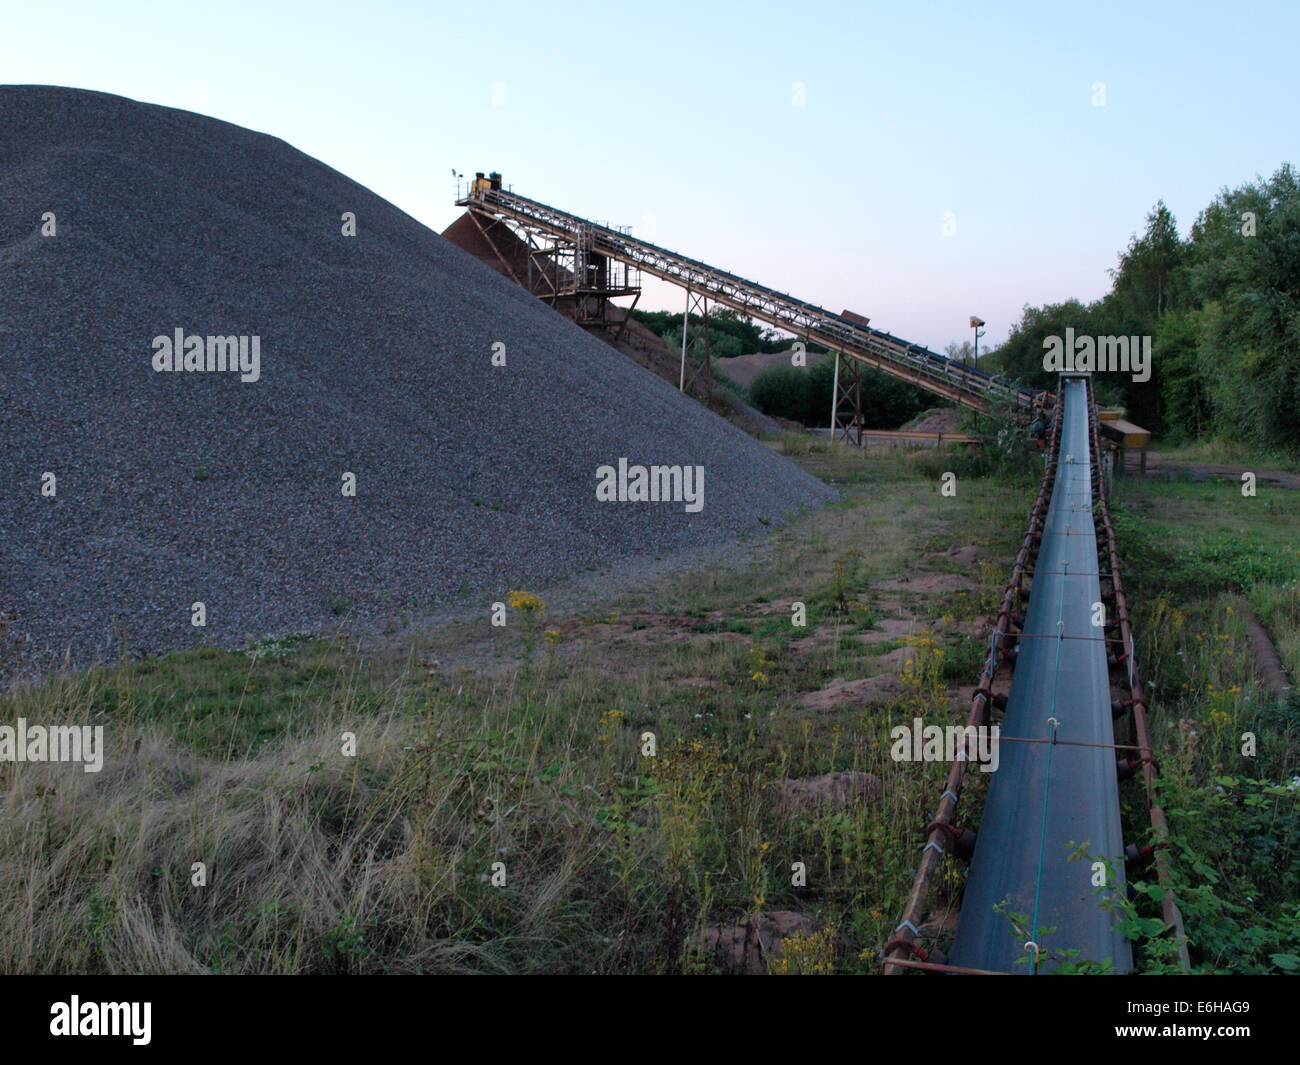 Conveyor belt at a Quarry, Holt Heath, Worcestershire, UK Stock Photo